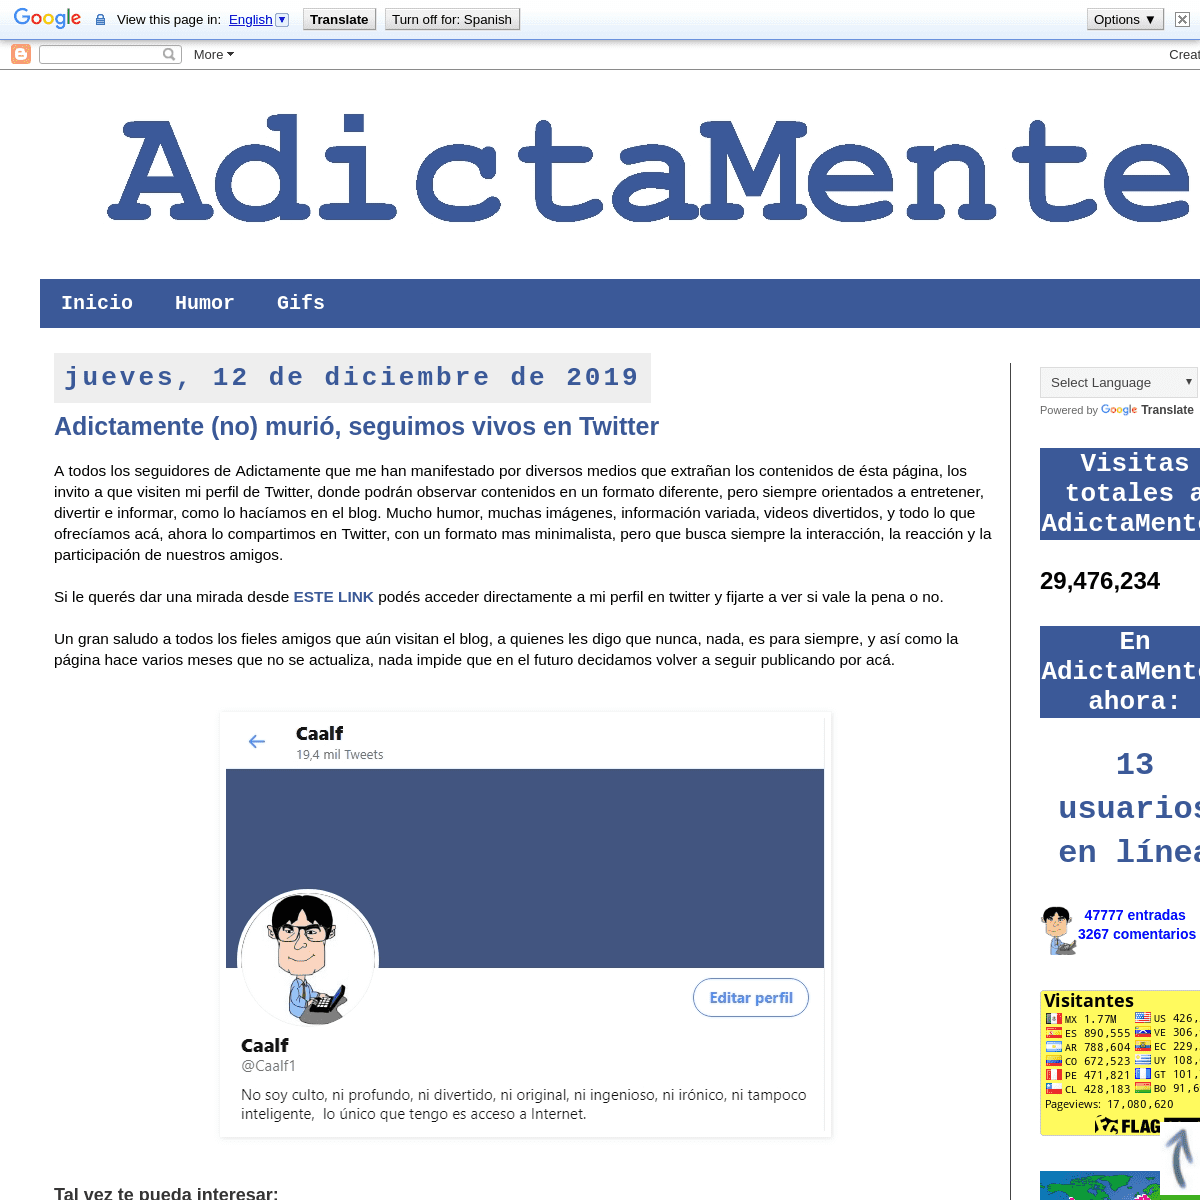 A complete backup of adictamente.blogspot.com